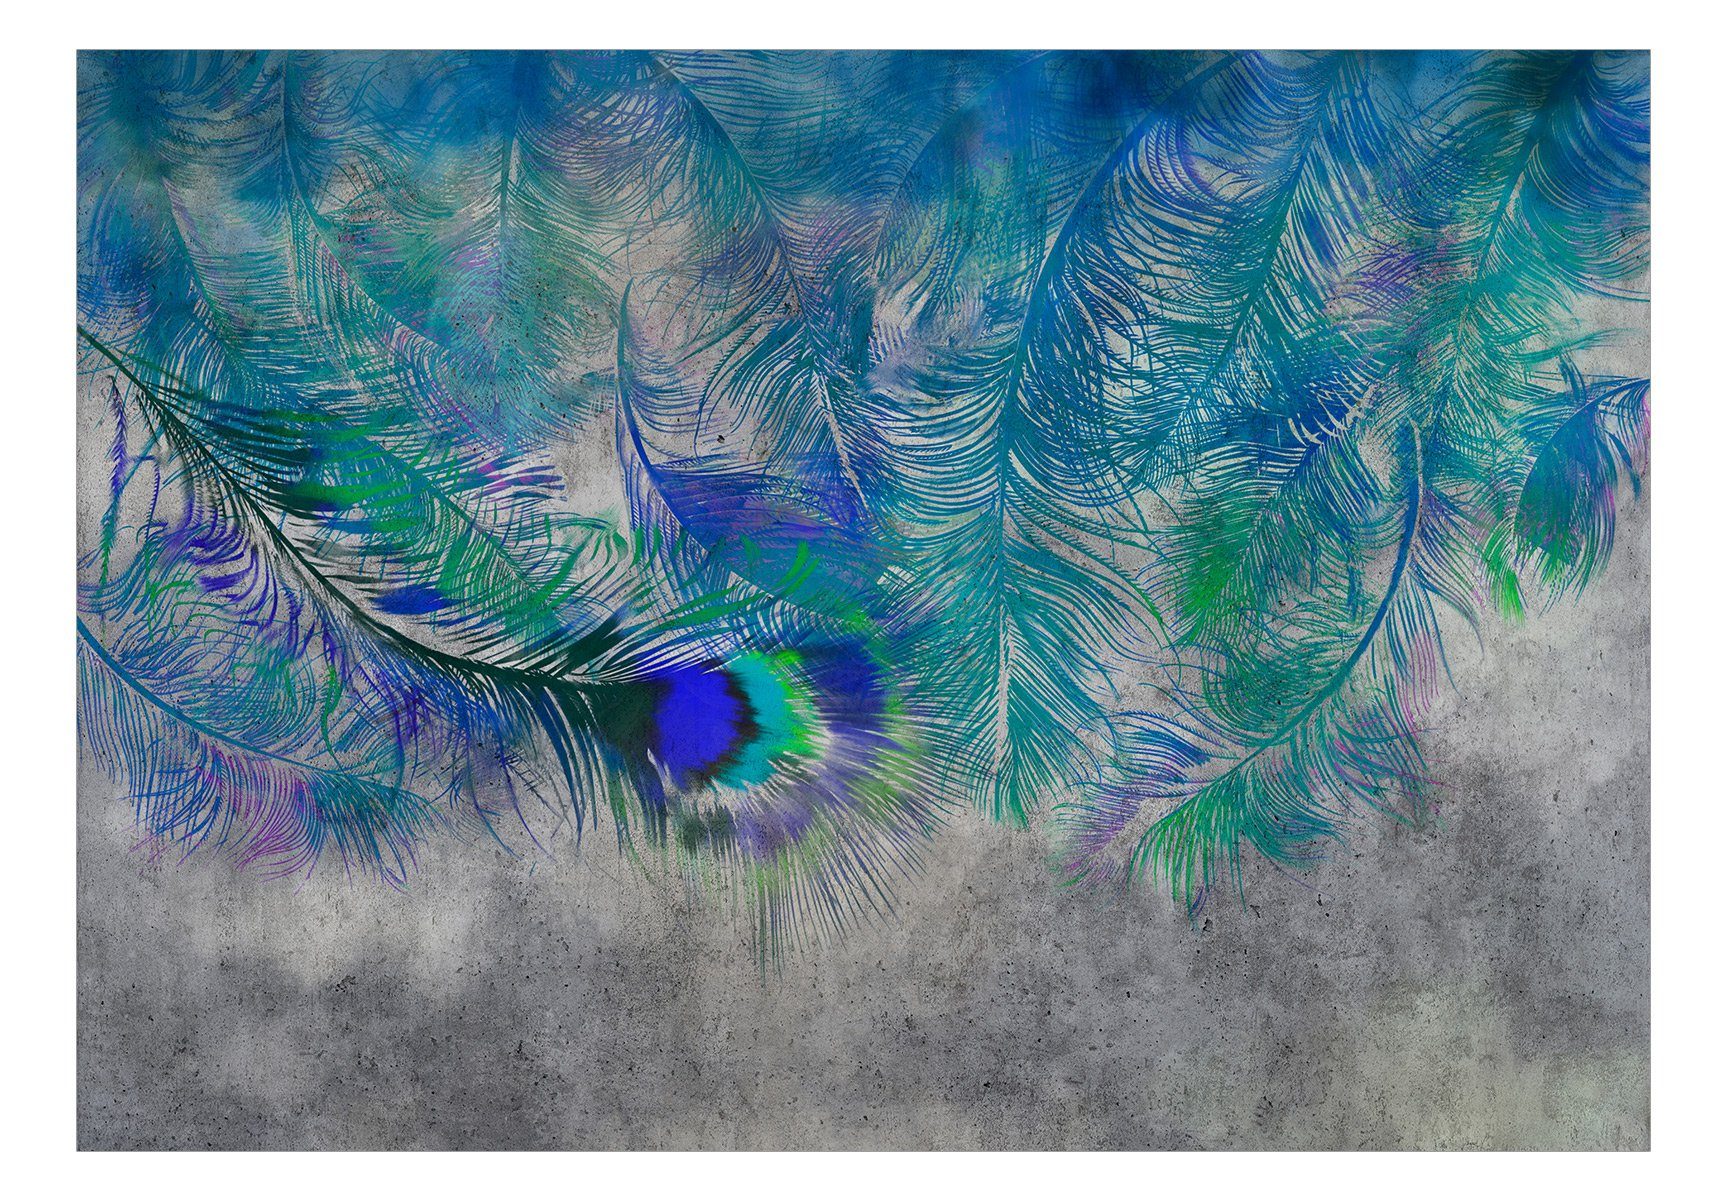 KUNSTLOFT Vliestapete Peacock matt, Feathers 0.98x0.7 Tapete Design lichtbeständige m